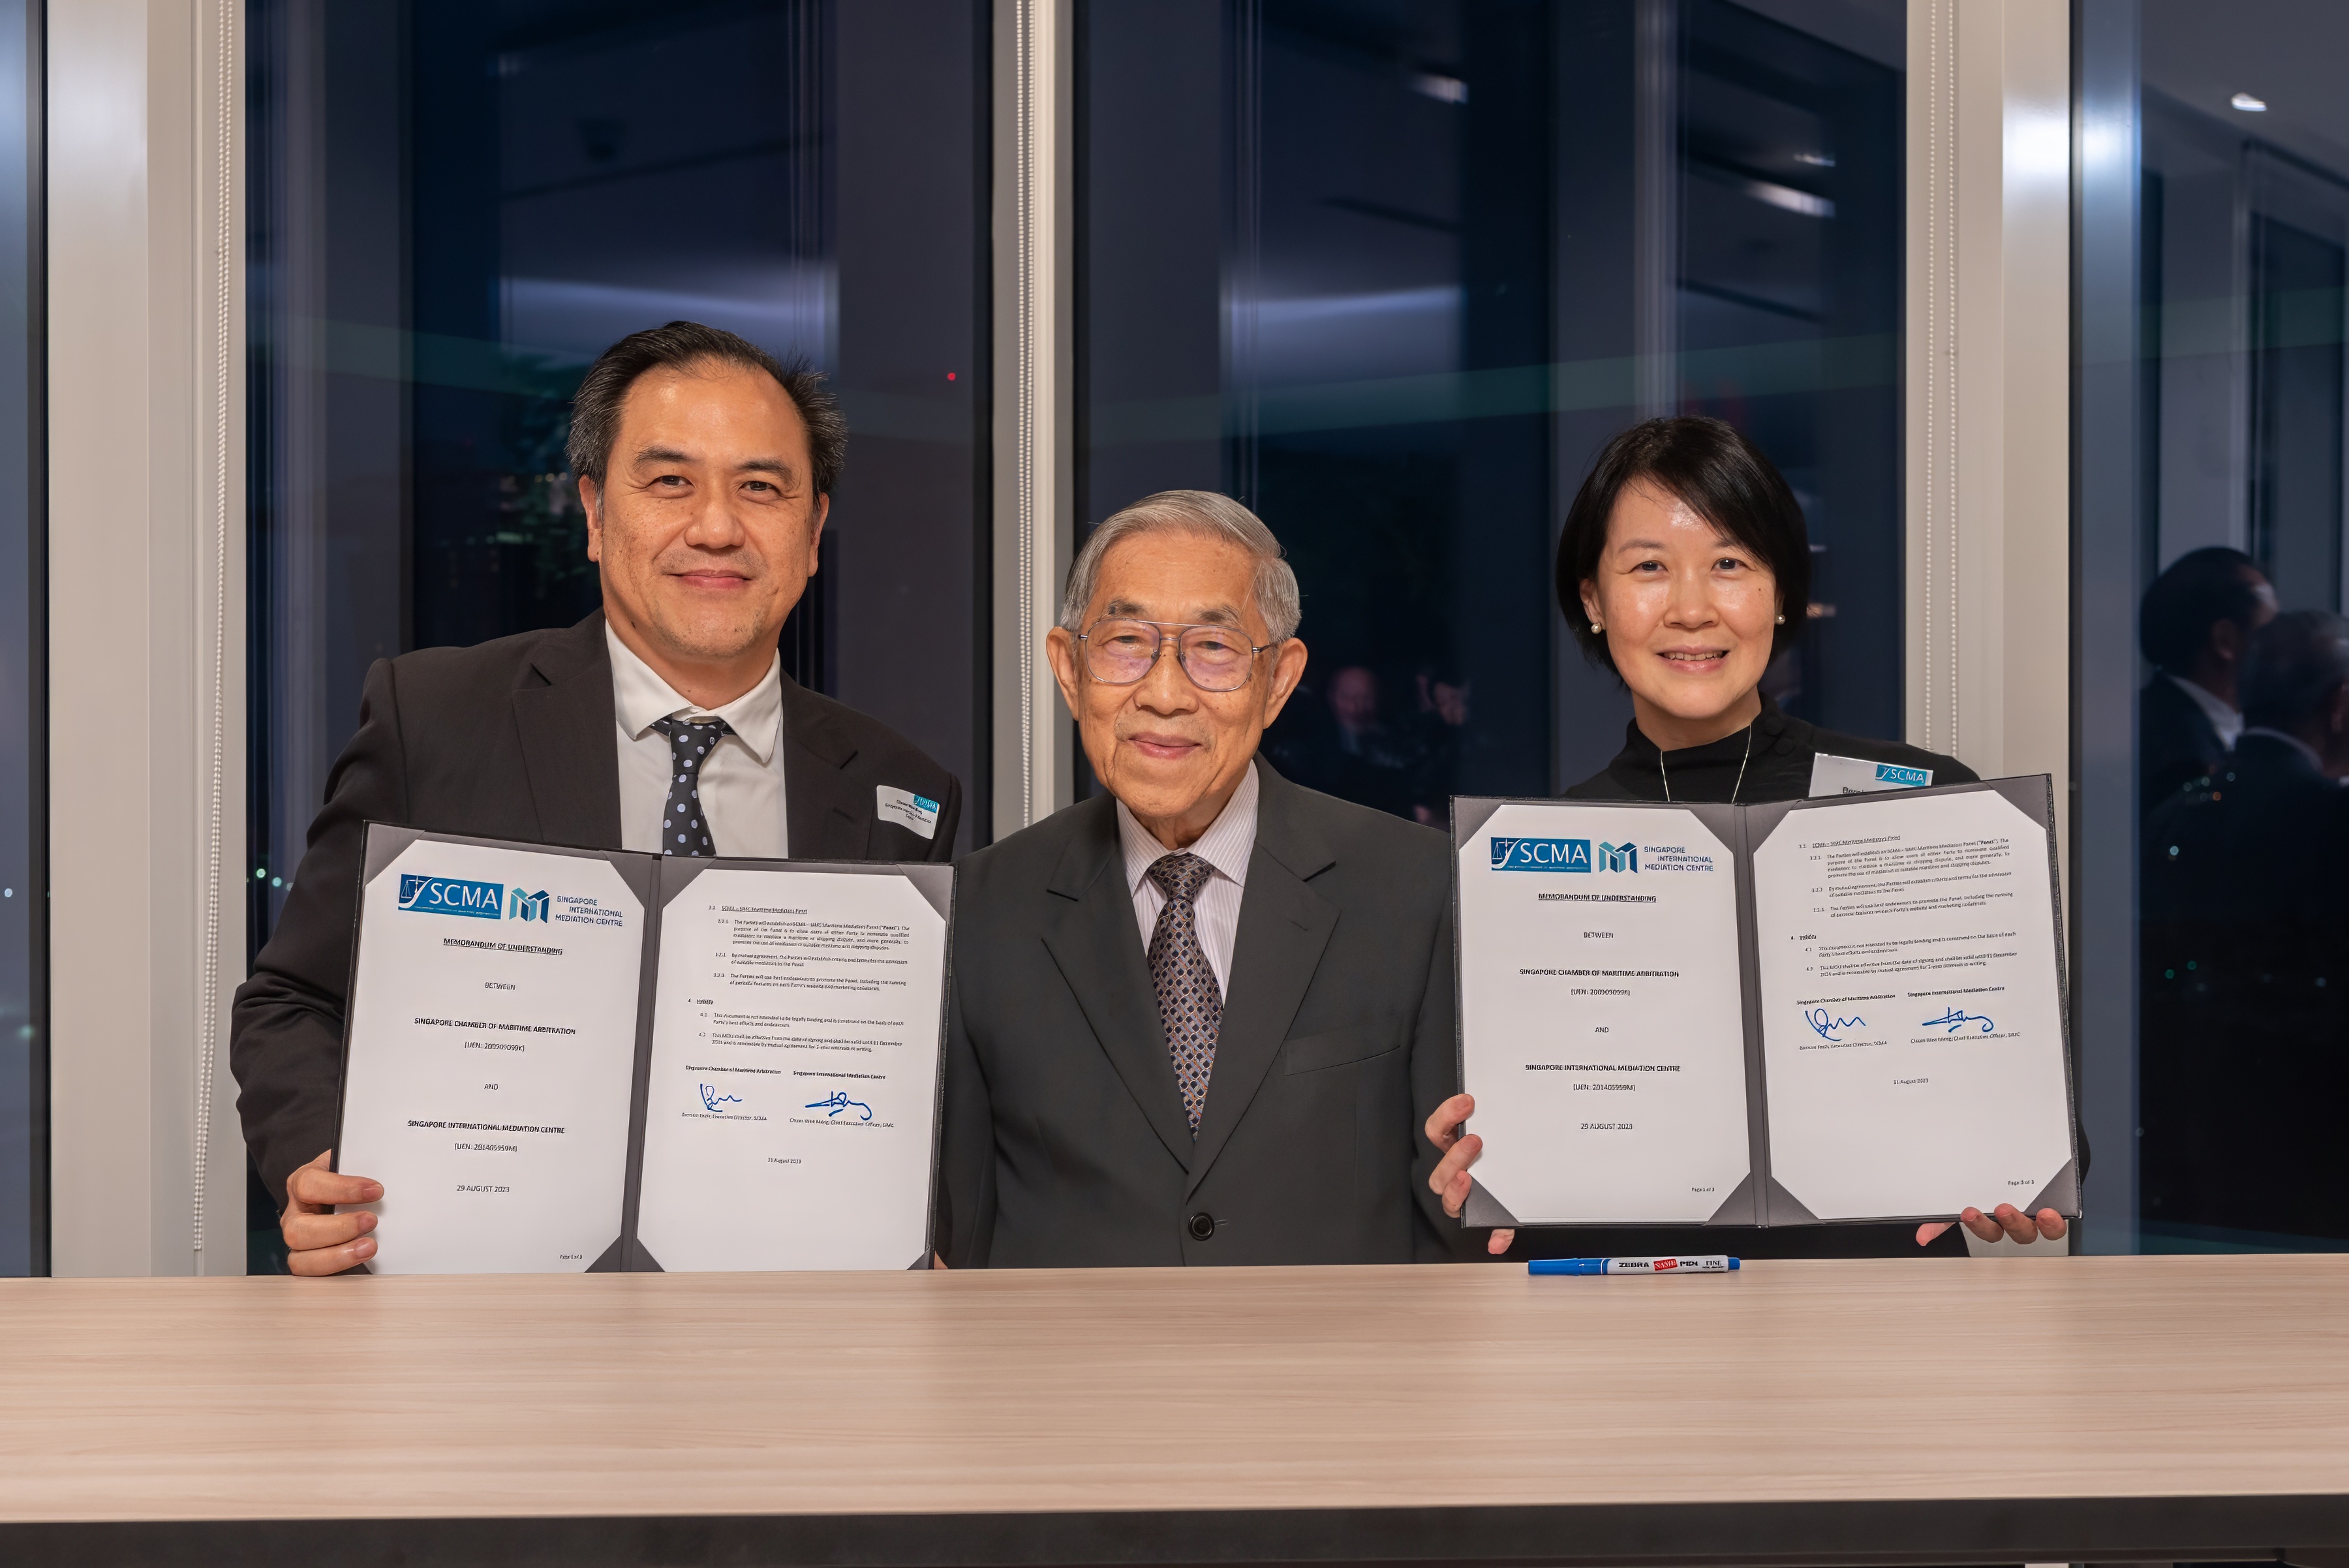 L-R: Chuan Wee Meng, CEO, SIMC; Chao Hick Tin SC, Chairman, SCMA; Bernice Yeoh, Executive Director, SCMA